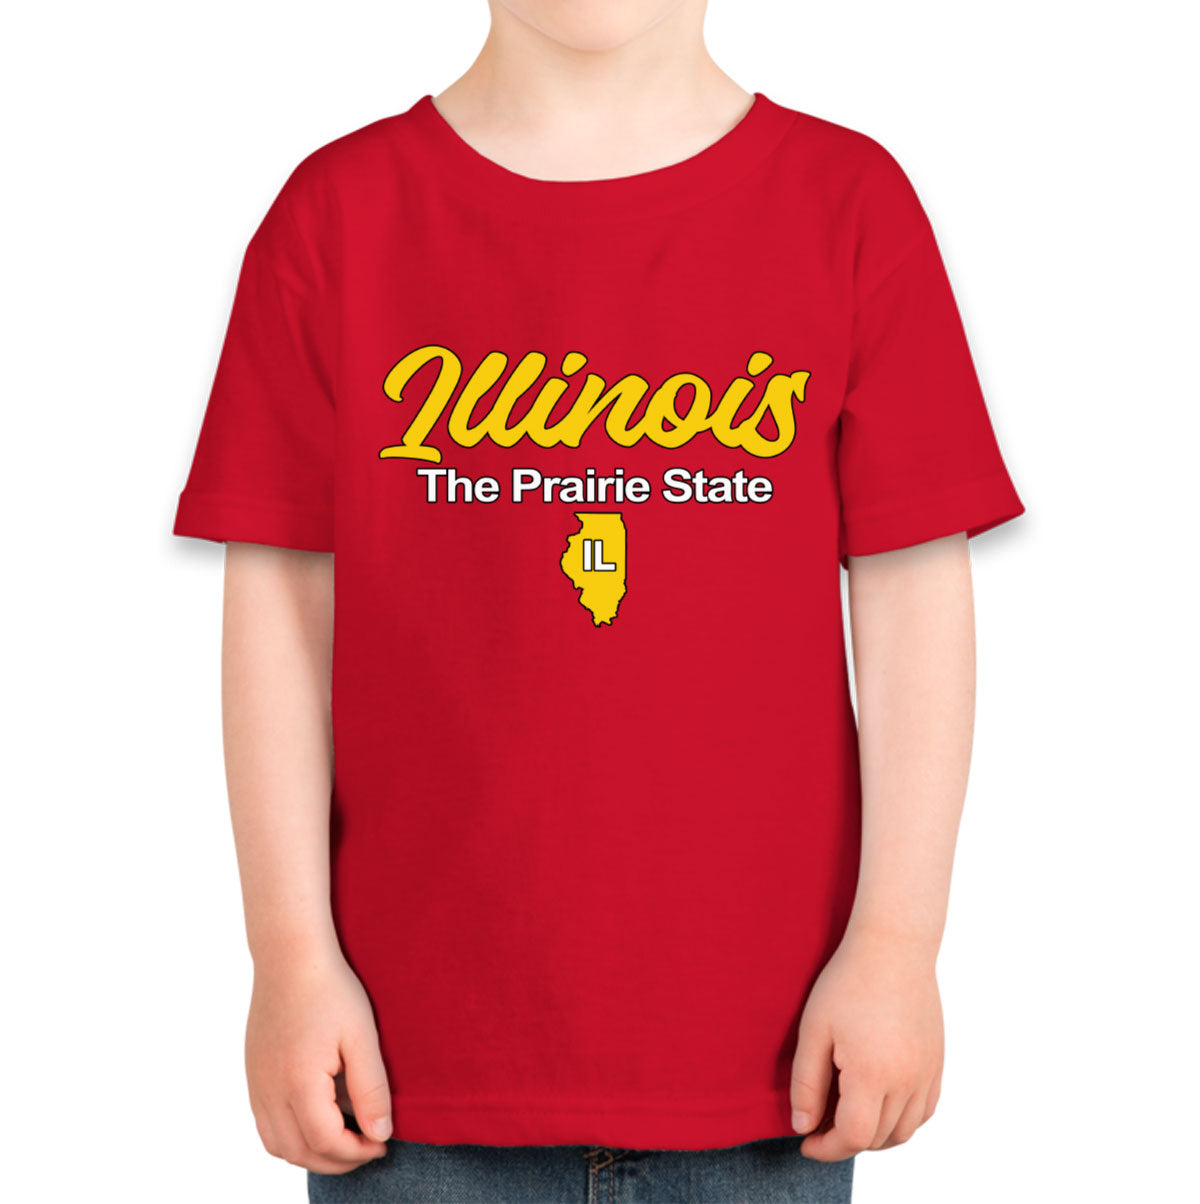 Illinois The Prairie State Toddler T-shirt